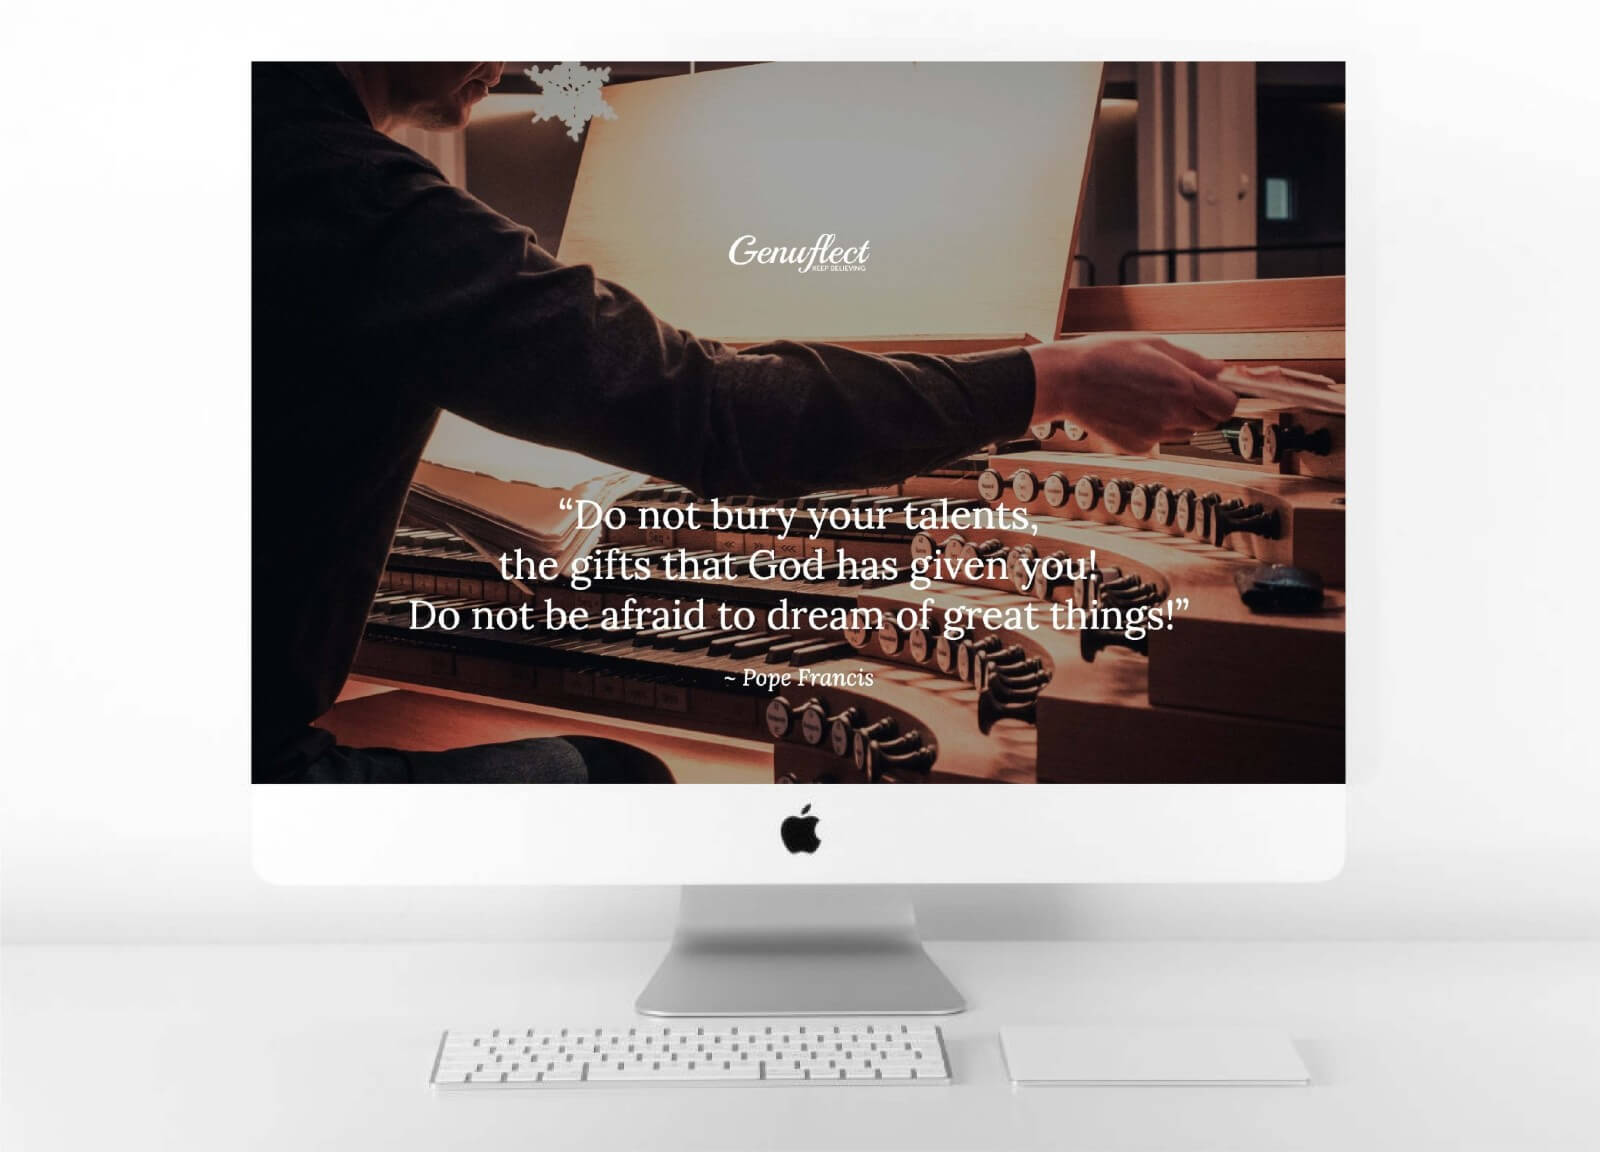 Genuflect - Computer background image of Organist making an adjustment